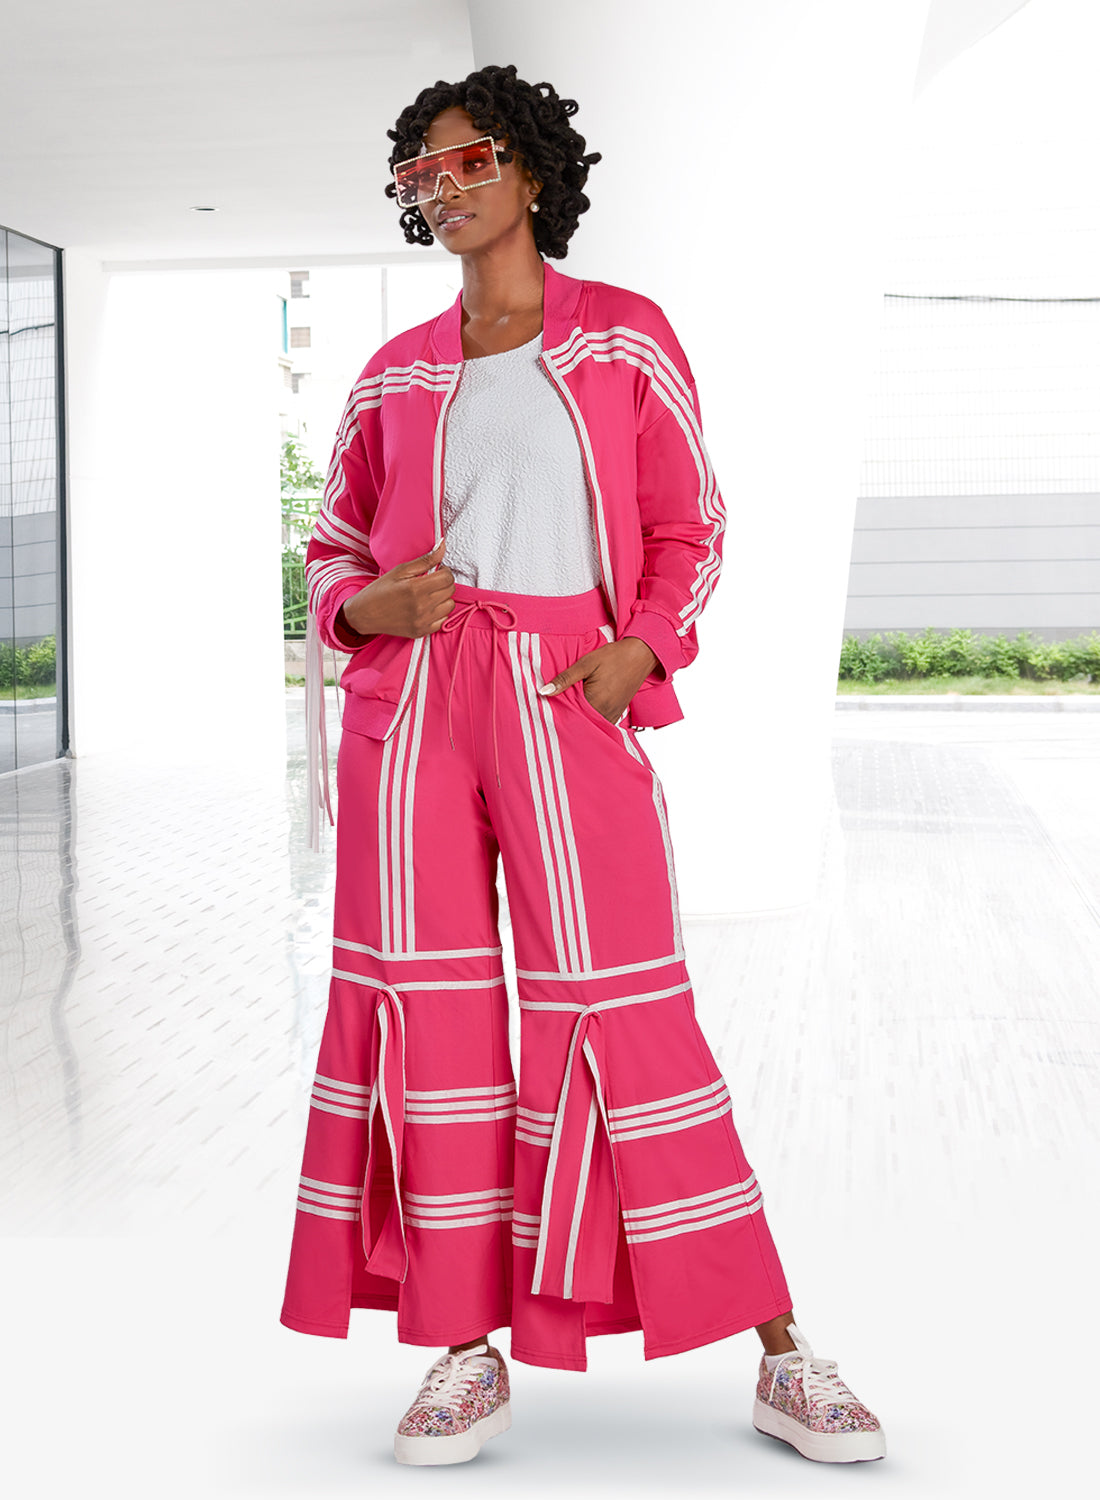 Donna Vinci Sport - 21043 - Hot Pink White - Stripe Trim Pant Set